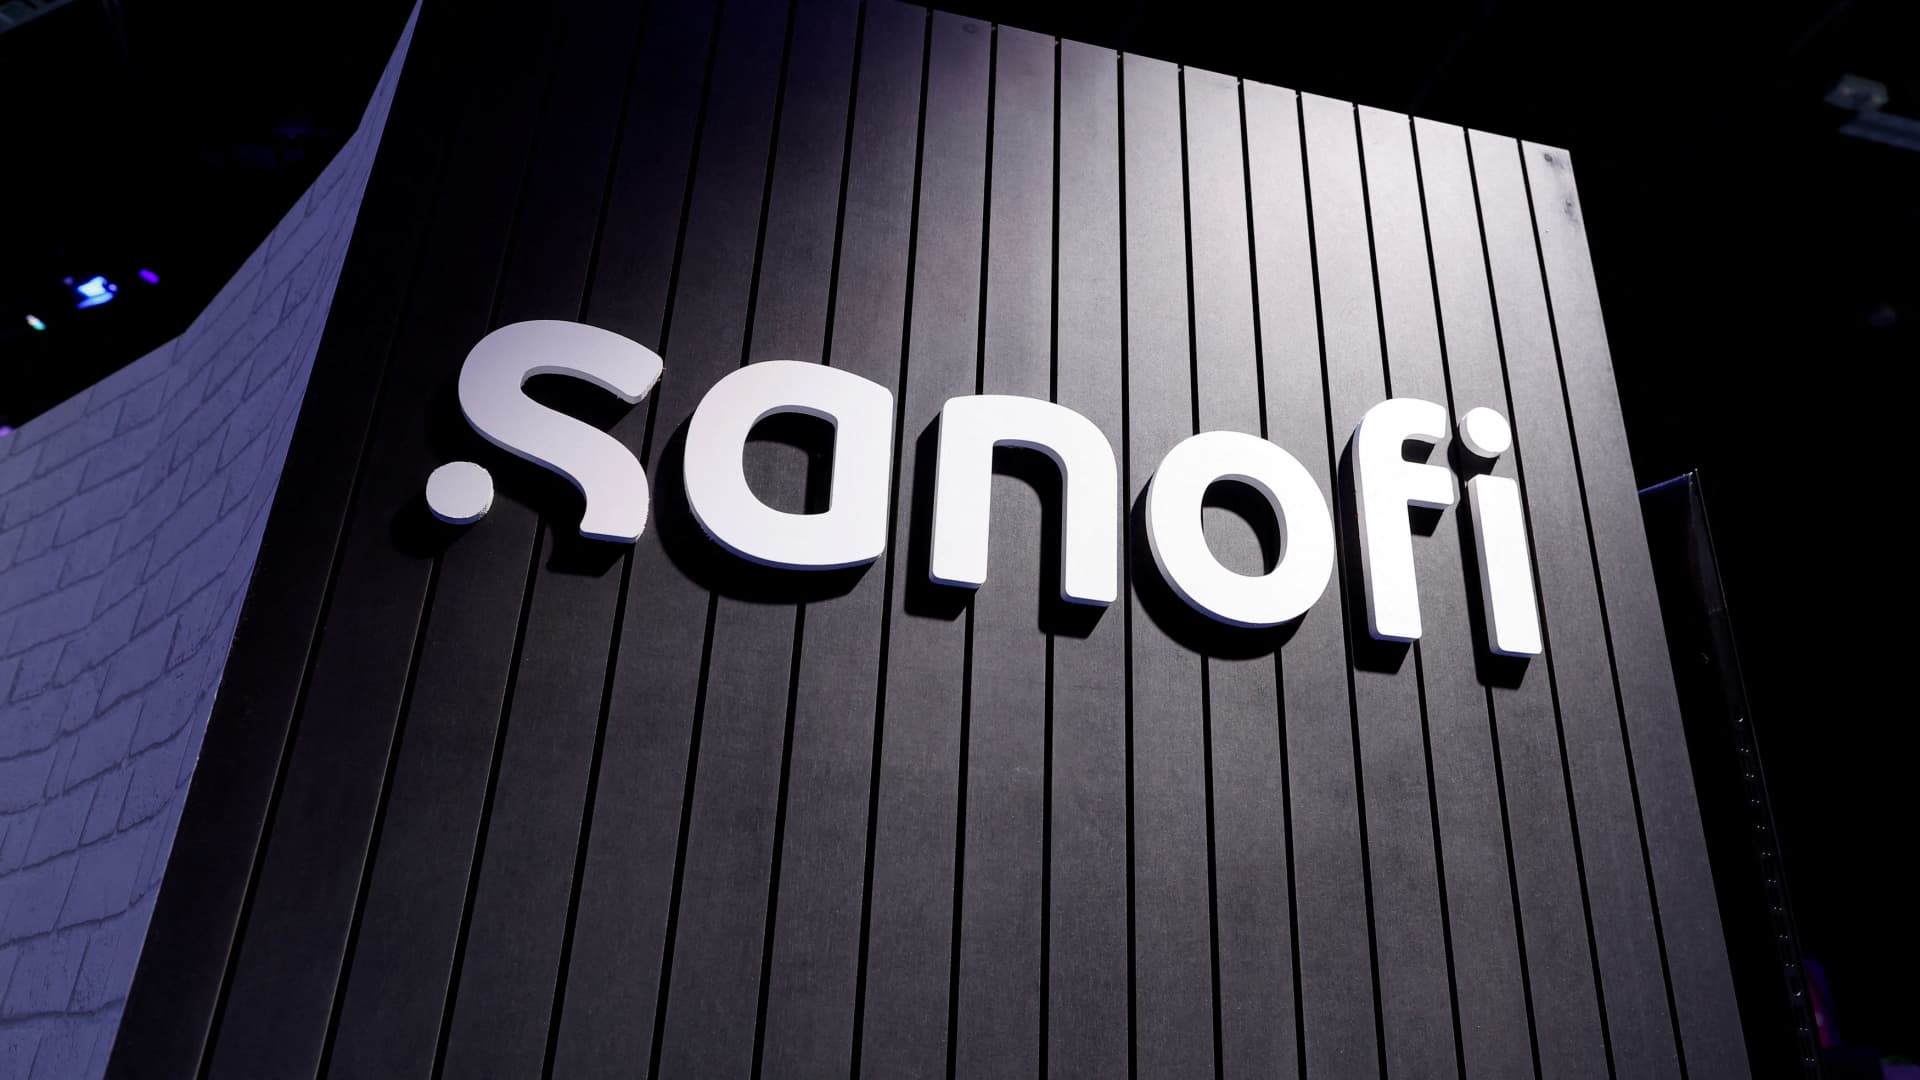 French prosecutors investigating Sanofi over possible market manipulation